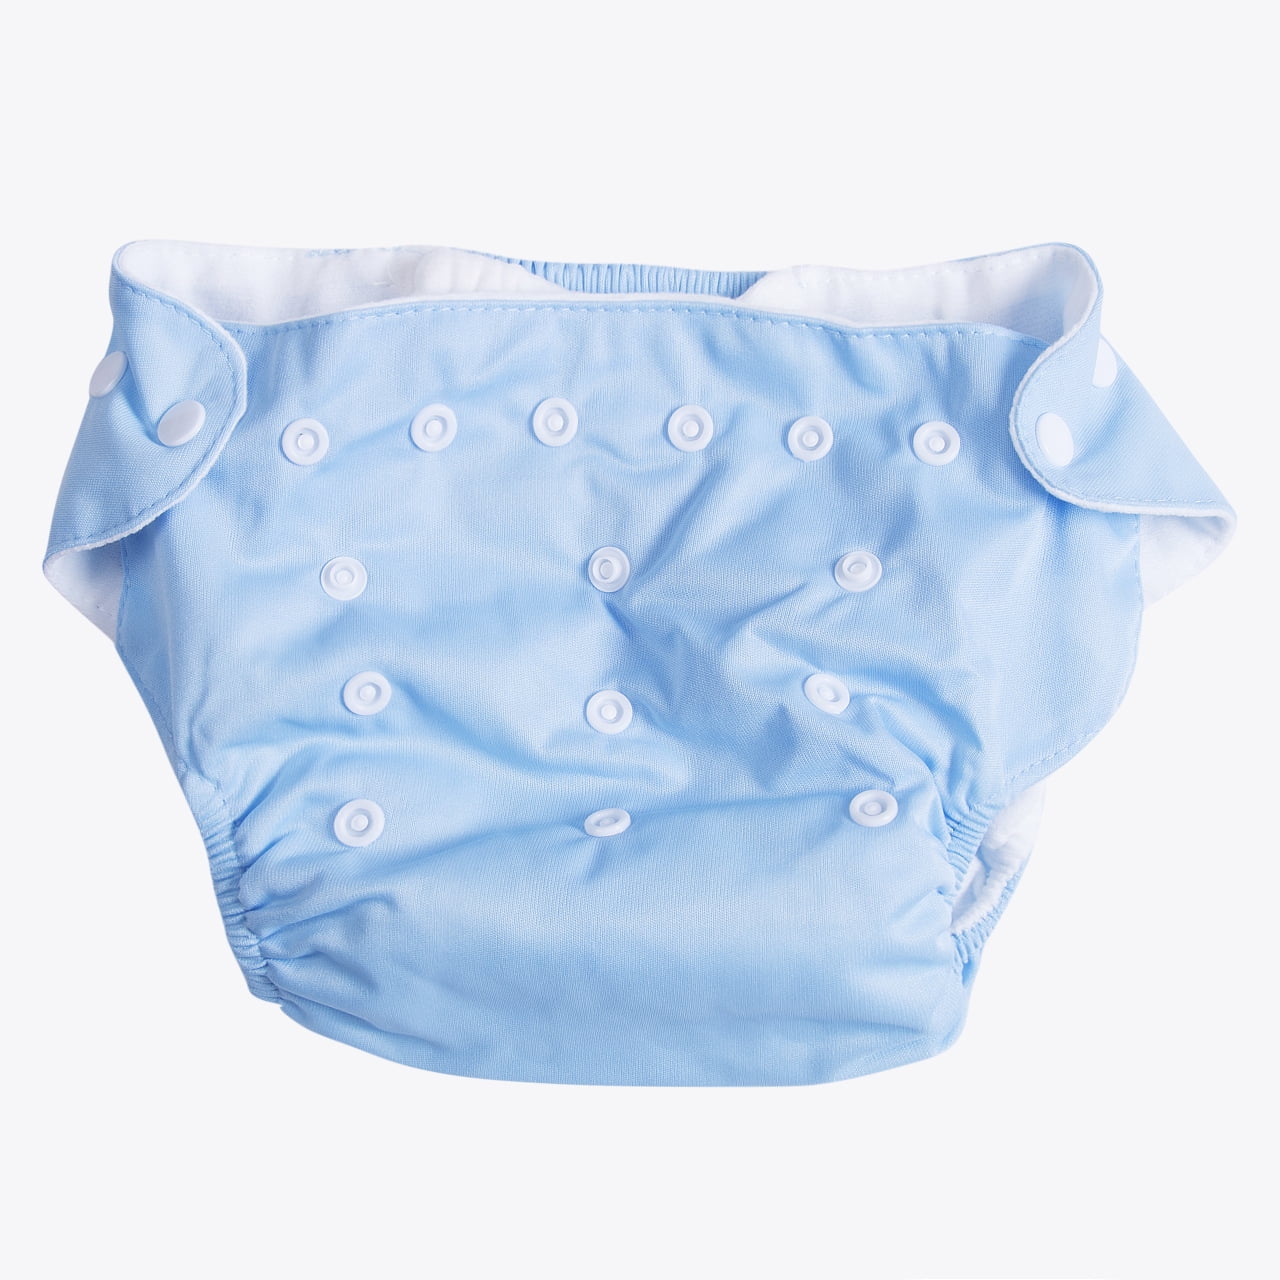 Baby One Size Plain Color Cloth Diaper Reusable Pocket Nappy Newborn Adjustable 